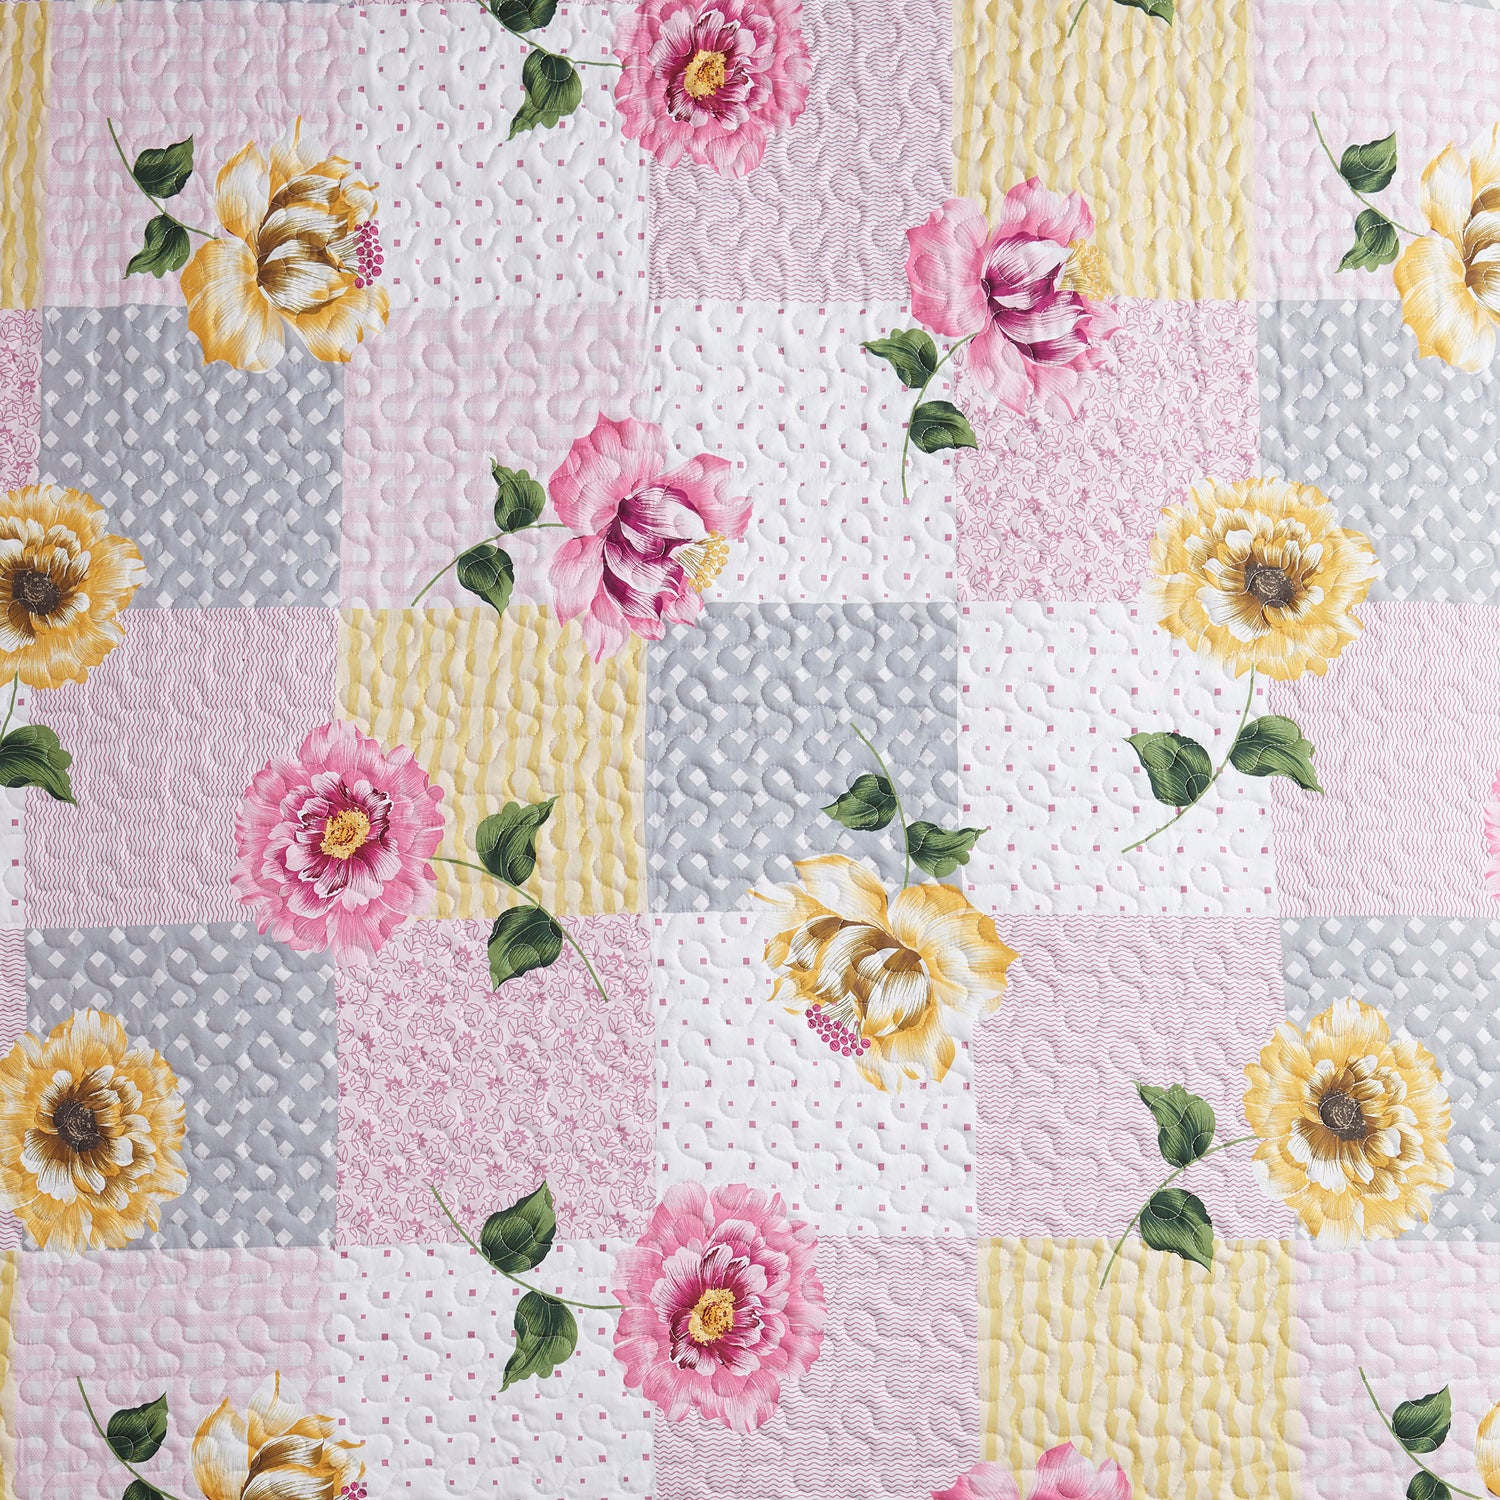 Printed 3-Piece Quilt Set, Floral Patchwork - Fabric